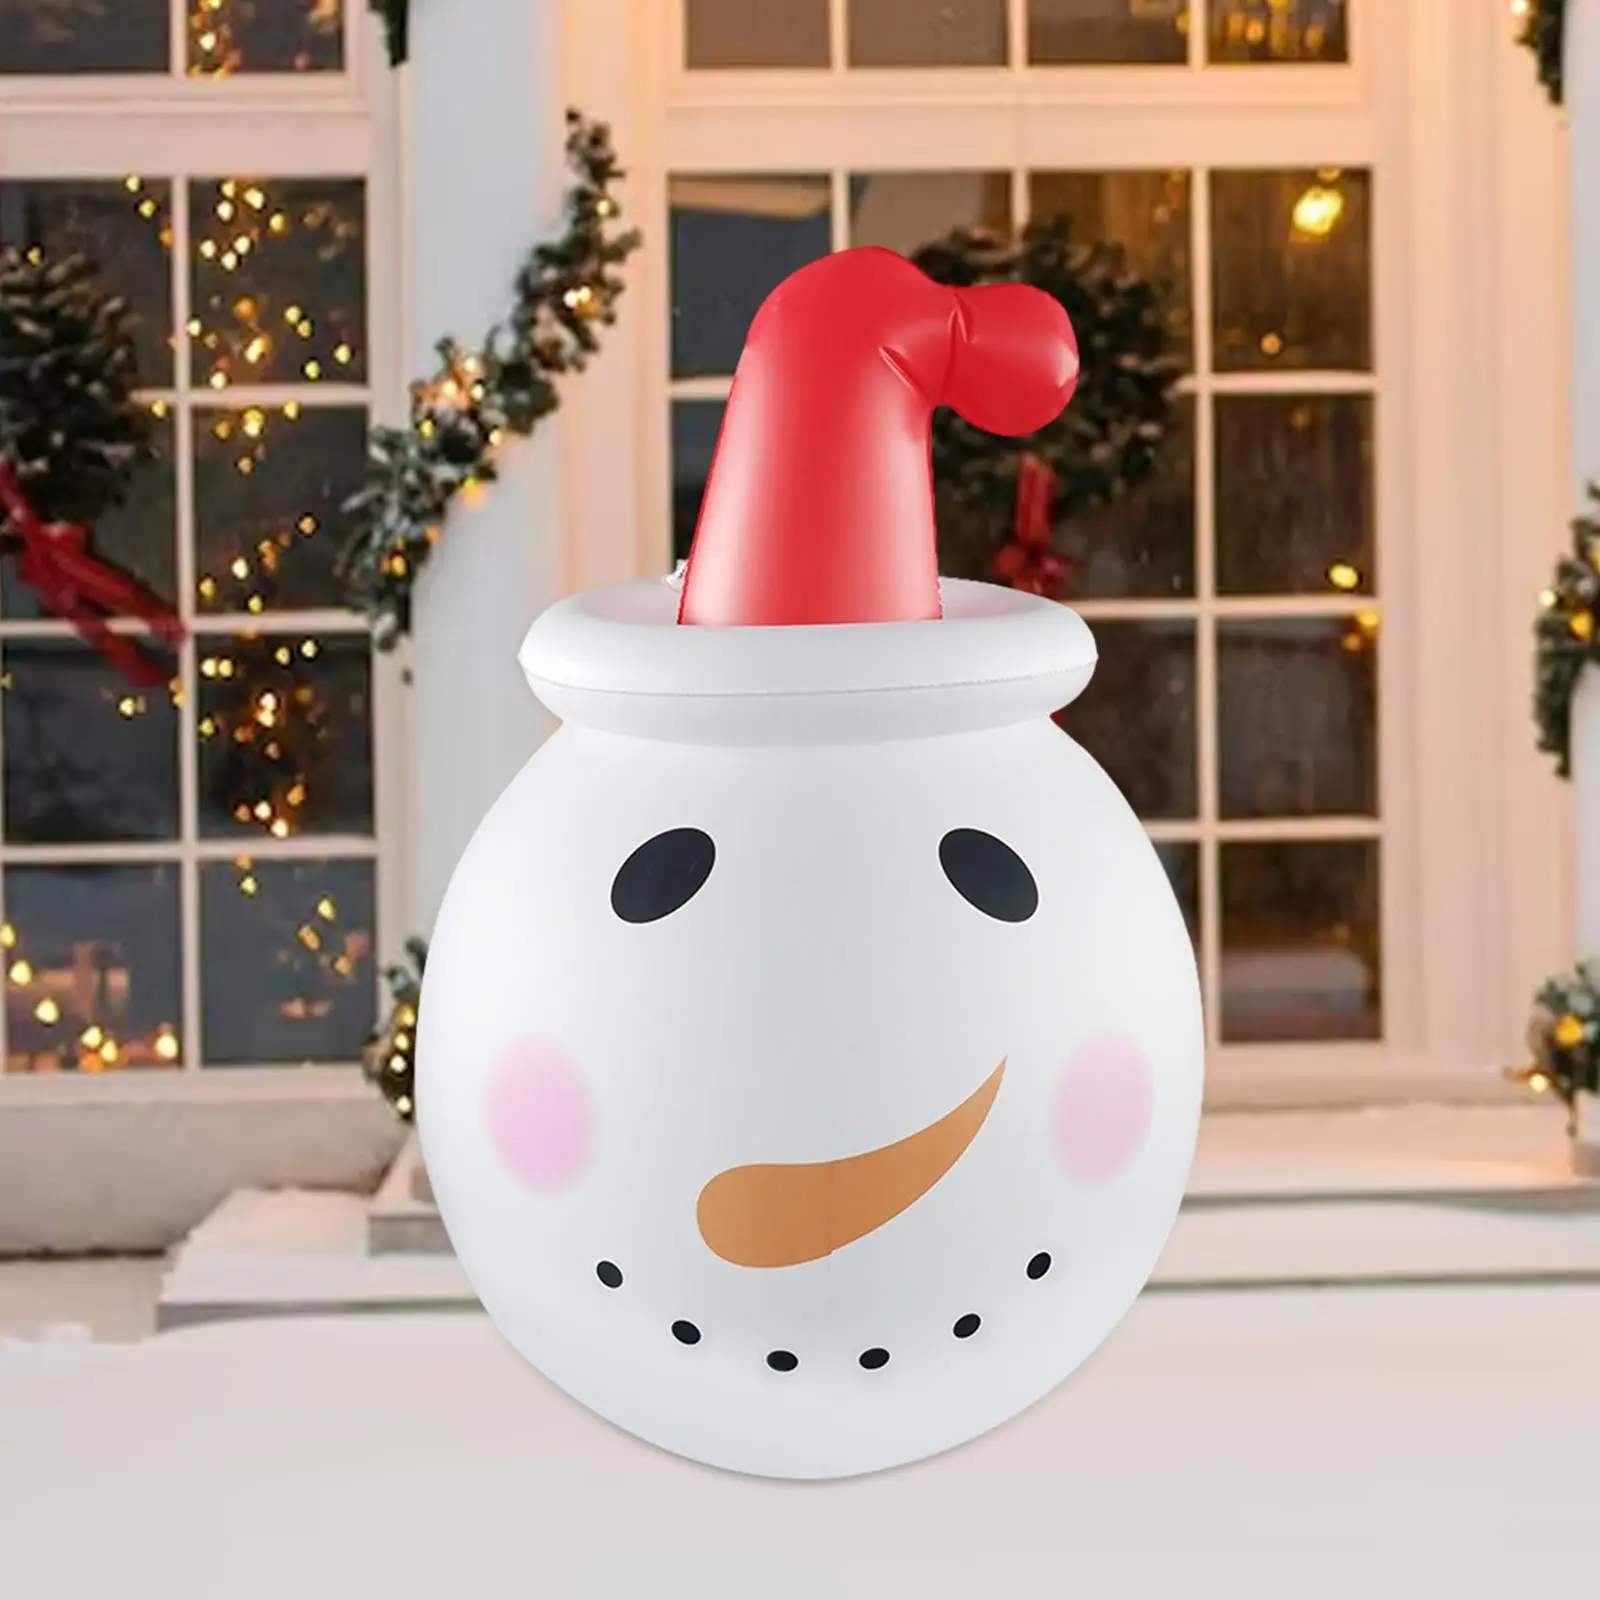 Christmas Inflatable Snowman Ornament Artwork Cute Creative Night Light Xmas Snowball Decor for Cafe Backyard Home Year